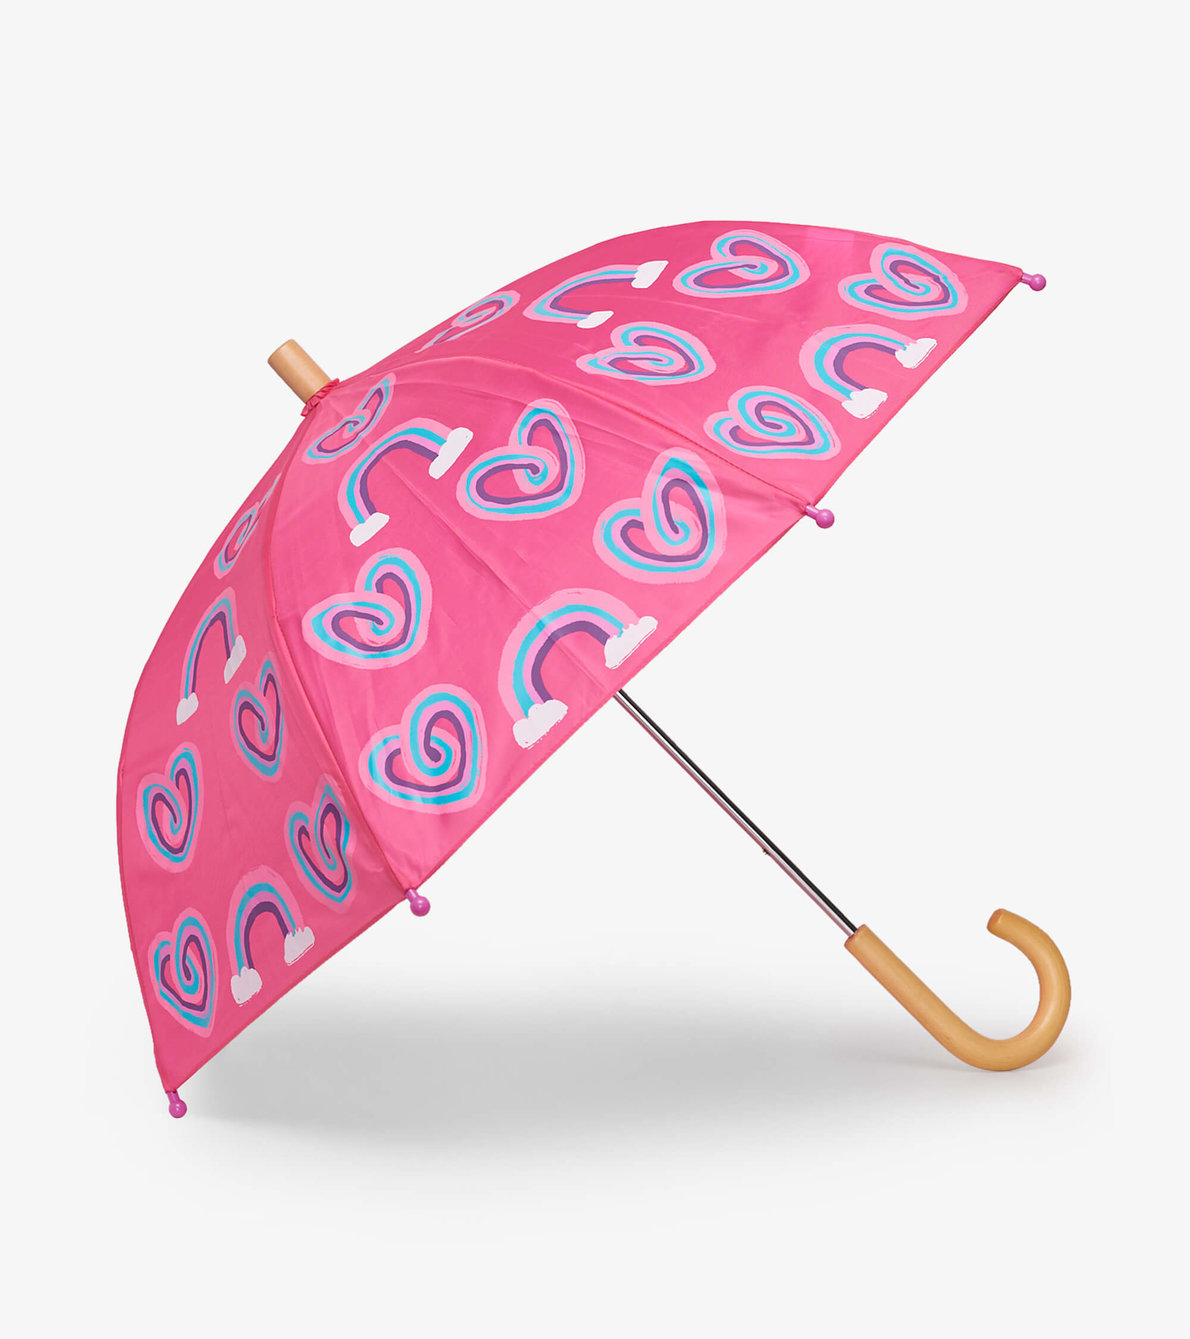 View larger image of Twisty Rainbow Hearts Umbrella